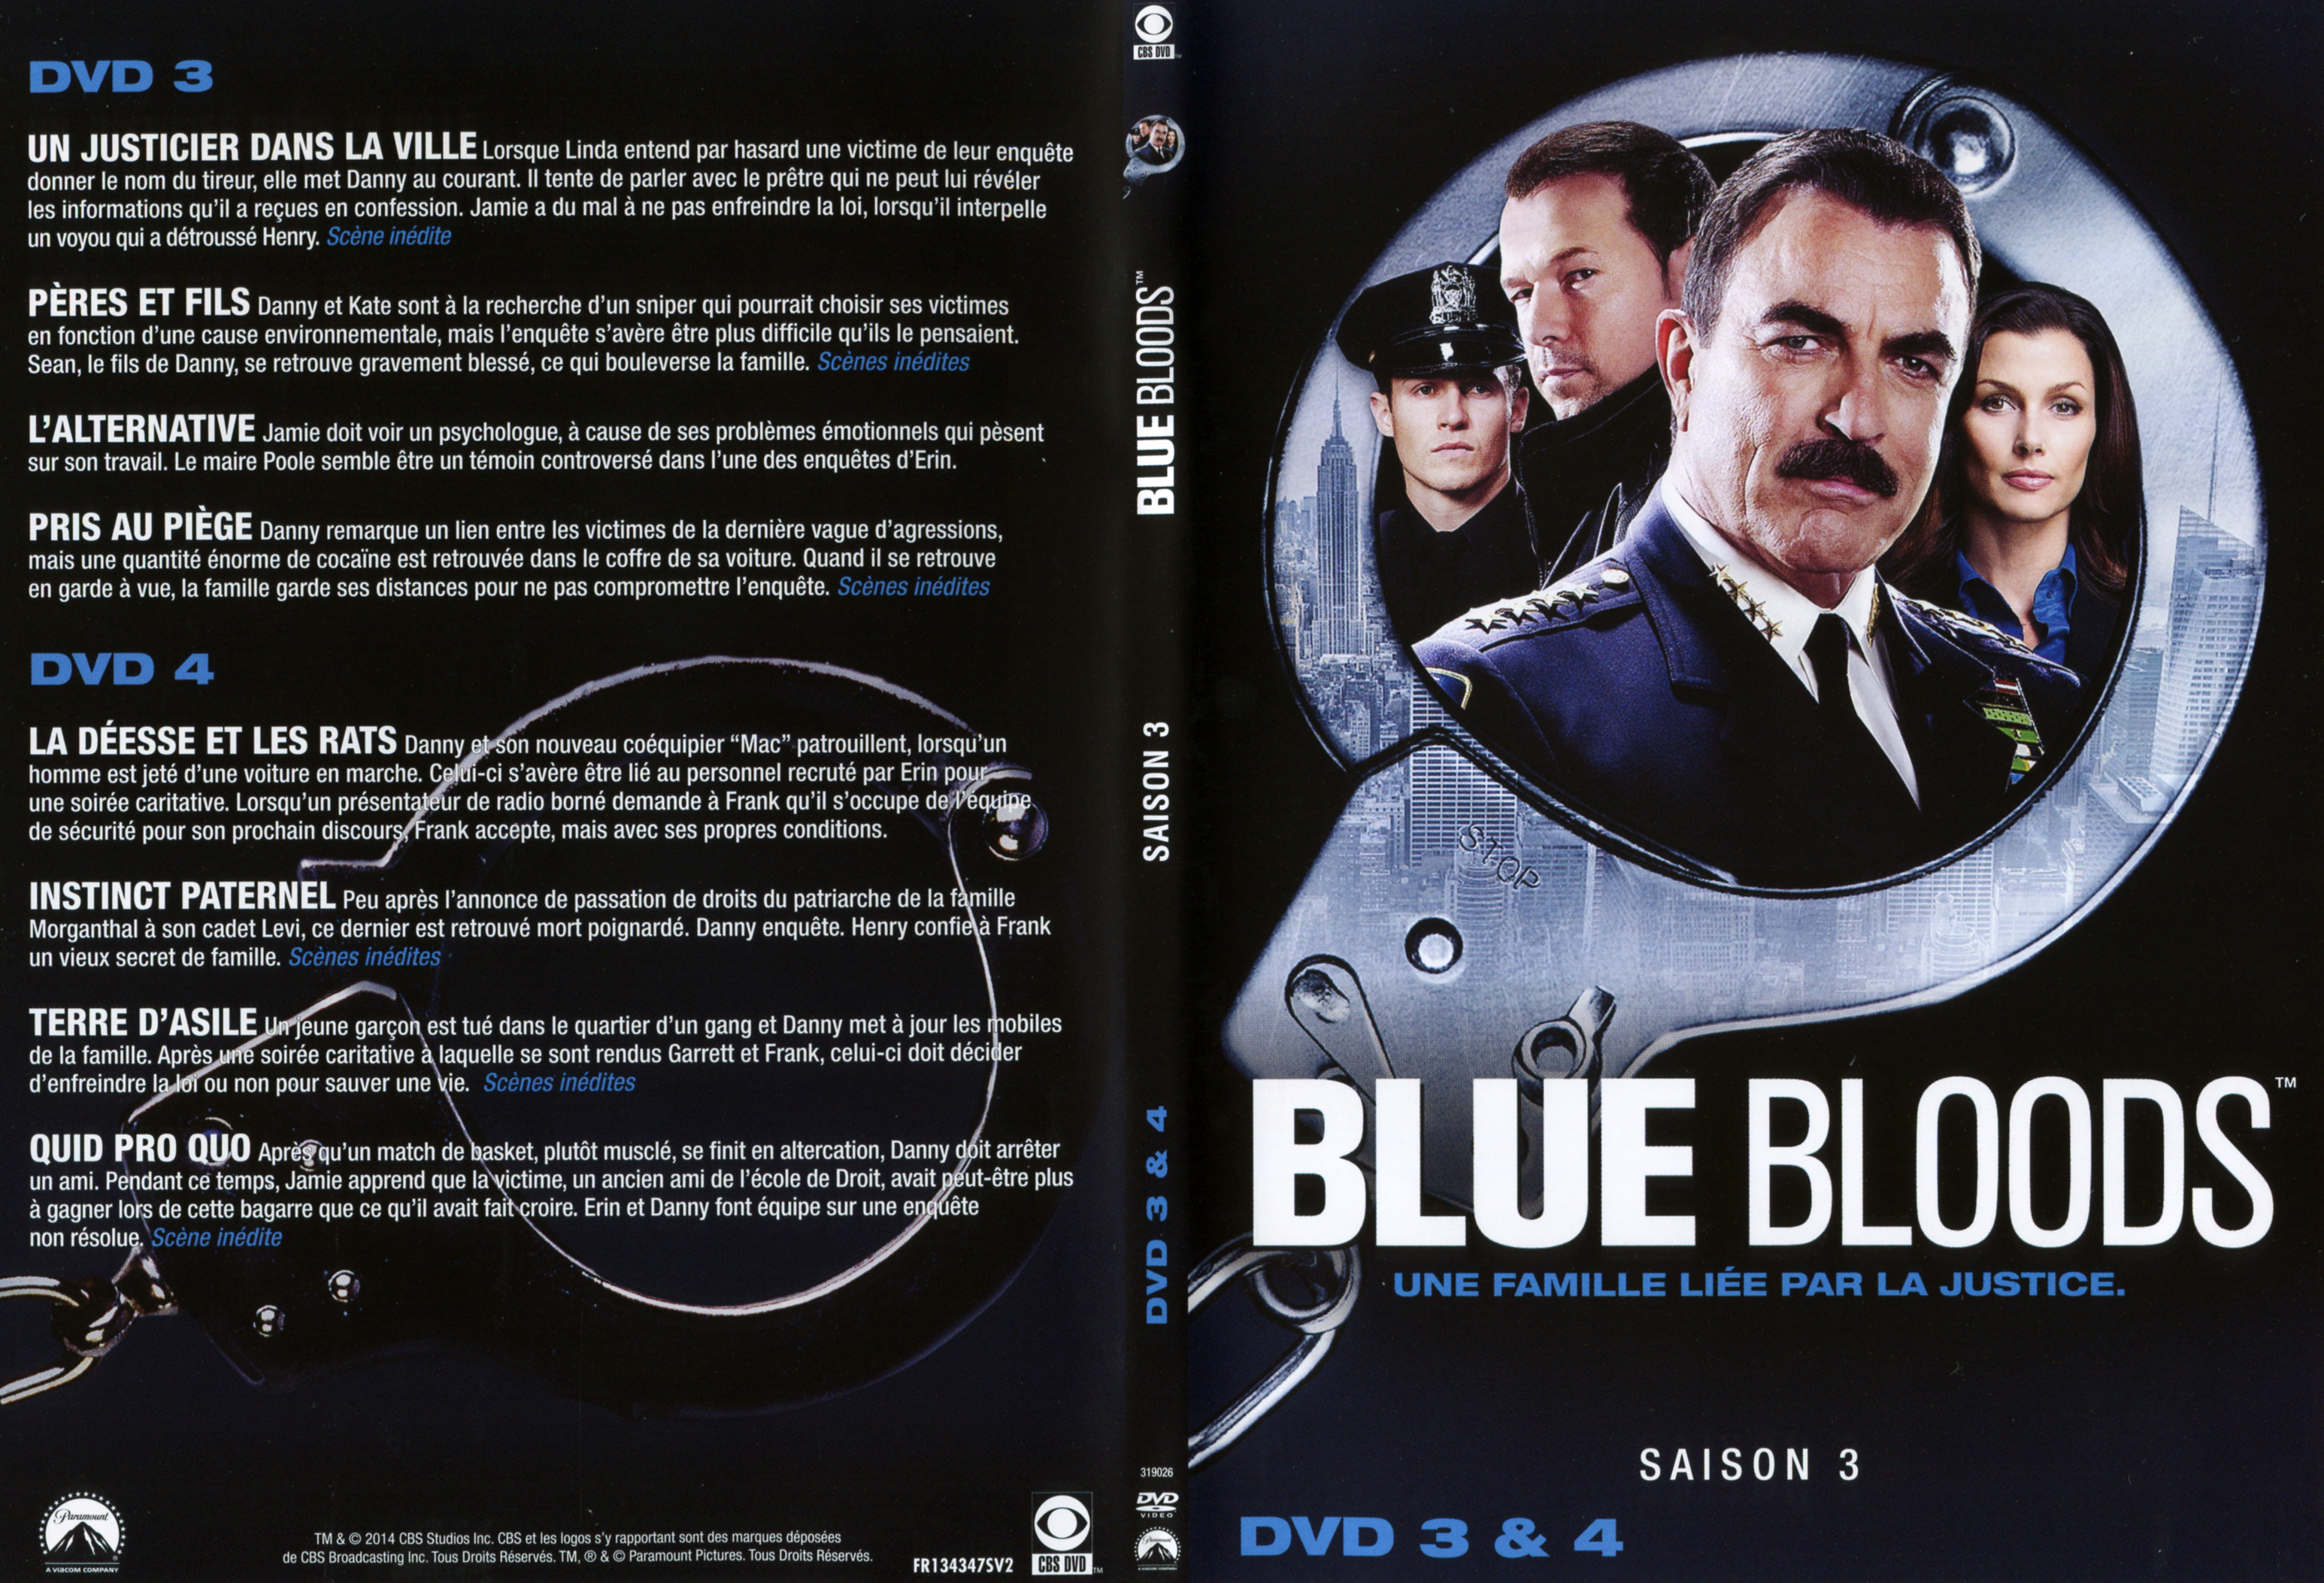 Jaquette DVD Blue Bloods saison 3 DVD 2